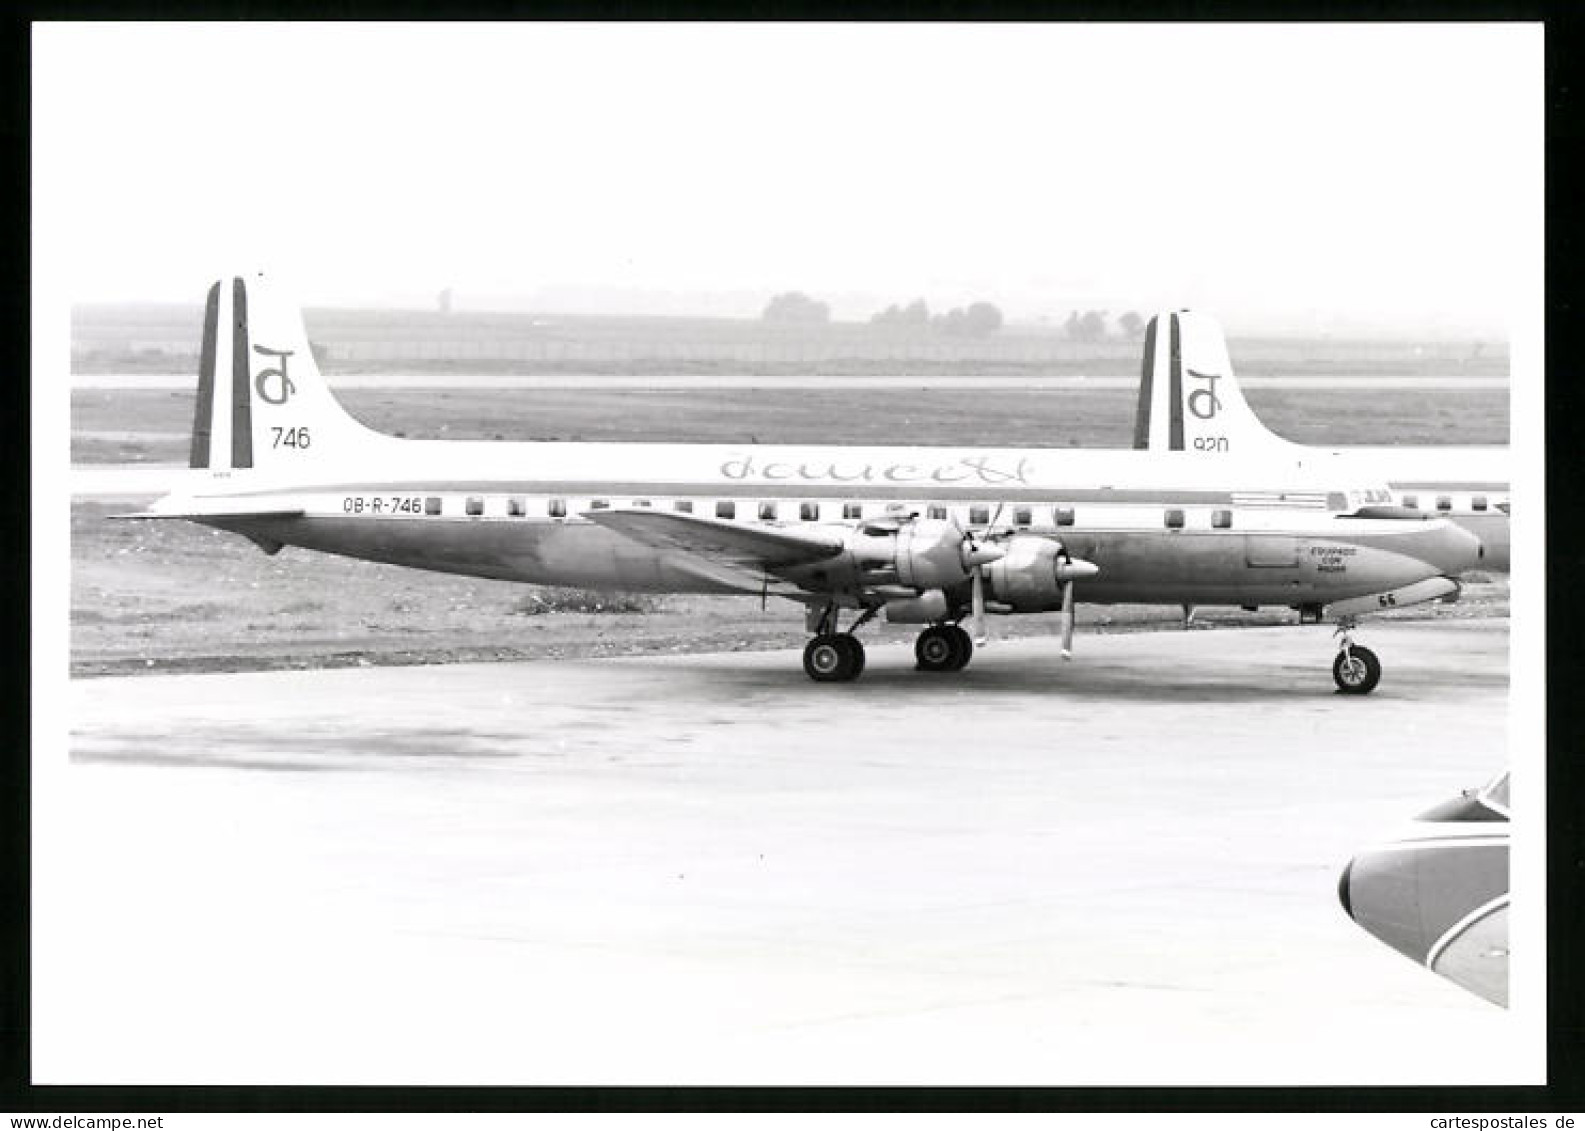 Fotografie Flugzeug Douglas DC-6, Passagierflugzeug Der Faucett, Kennung OB-R-746  - Aviation